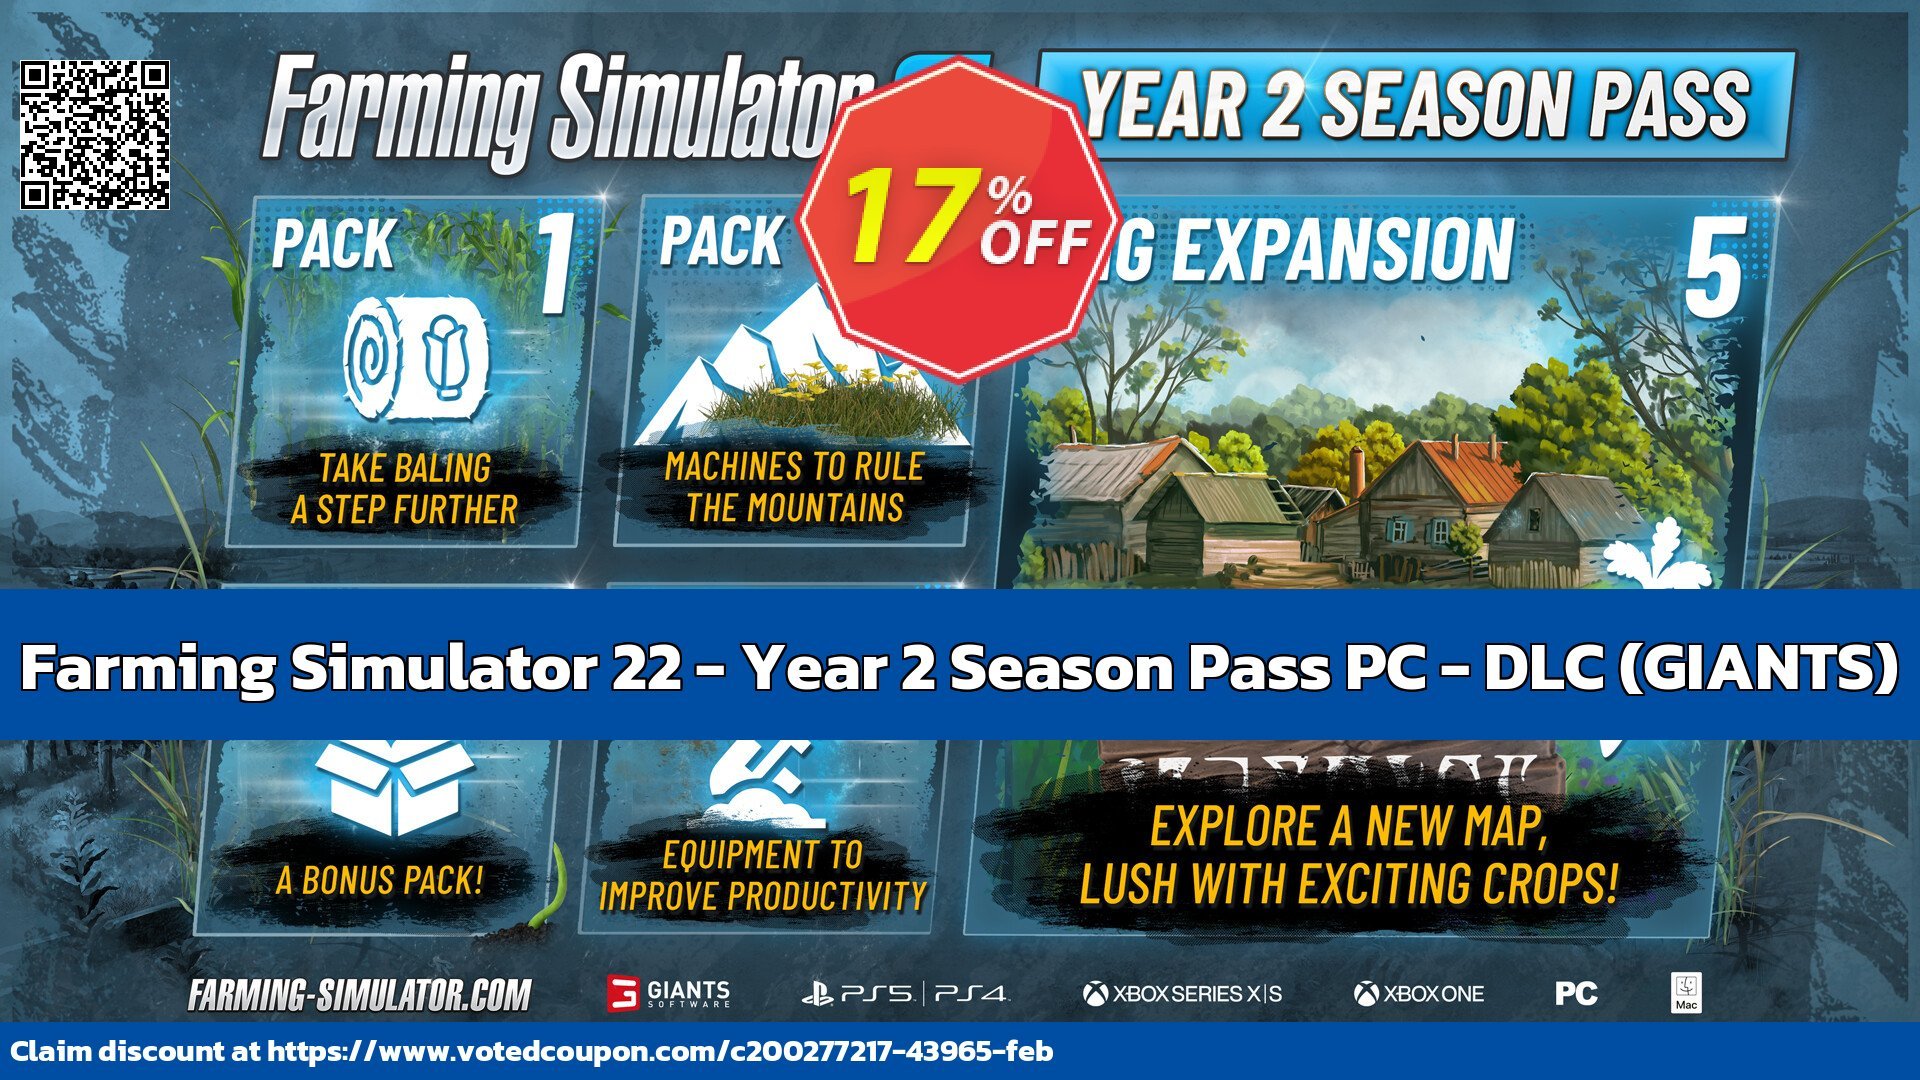 Farming Simulator 22 - Year 2 Season Pass PC - DLC, GIANTS  Coupon, discount Farming Simulator 22 - Year 2 Season Pass PC - DLC (GIANTS) Deal CDkeys. Promotion: Farming Simulator 22 - Year 2 Season Pass PC - DLC (GIANTS) Exclusive Sale offer